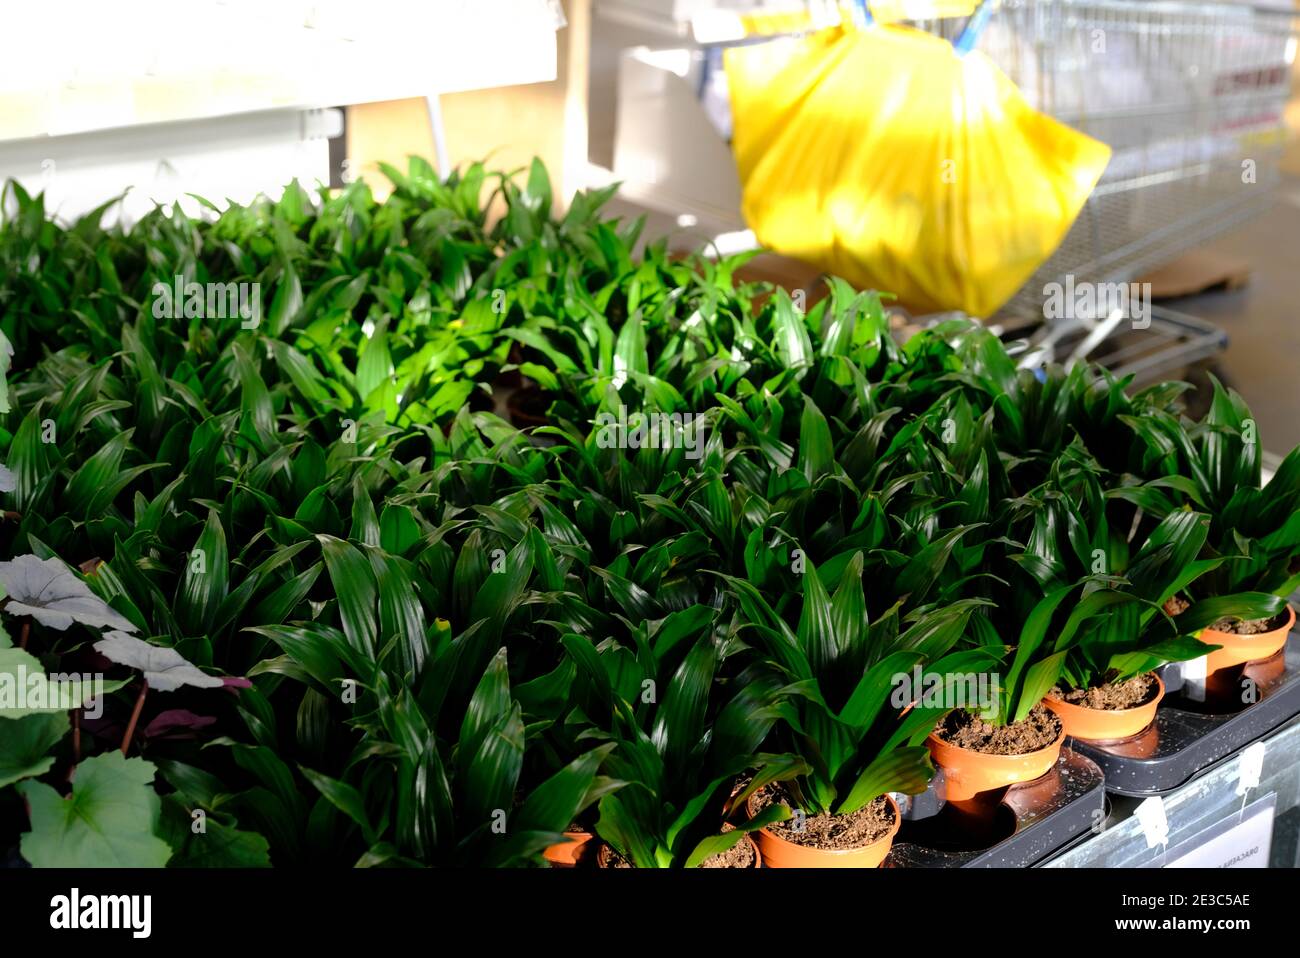 Rows of Dracaena compacta plants for sale in a garden shop Stock Photo